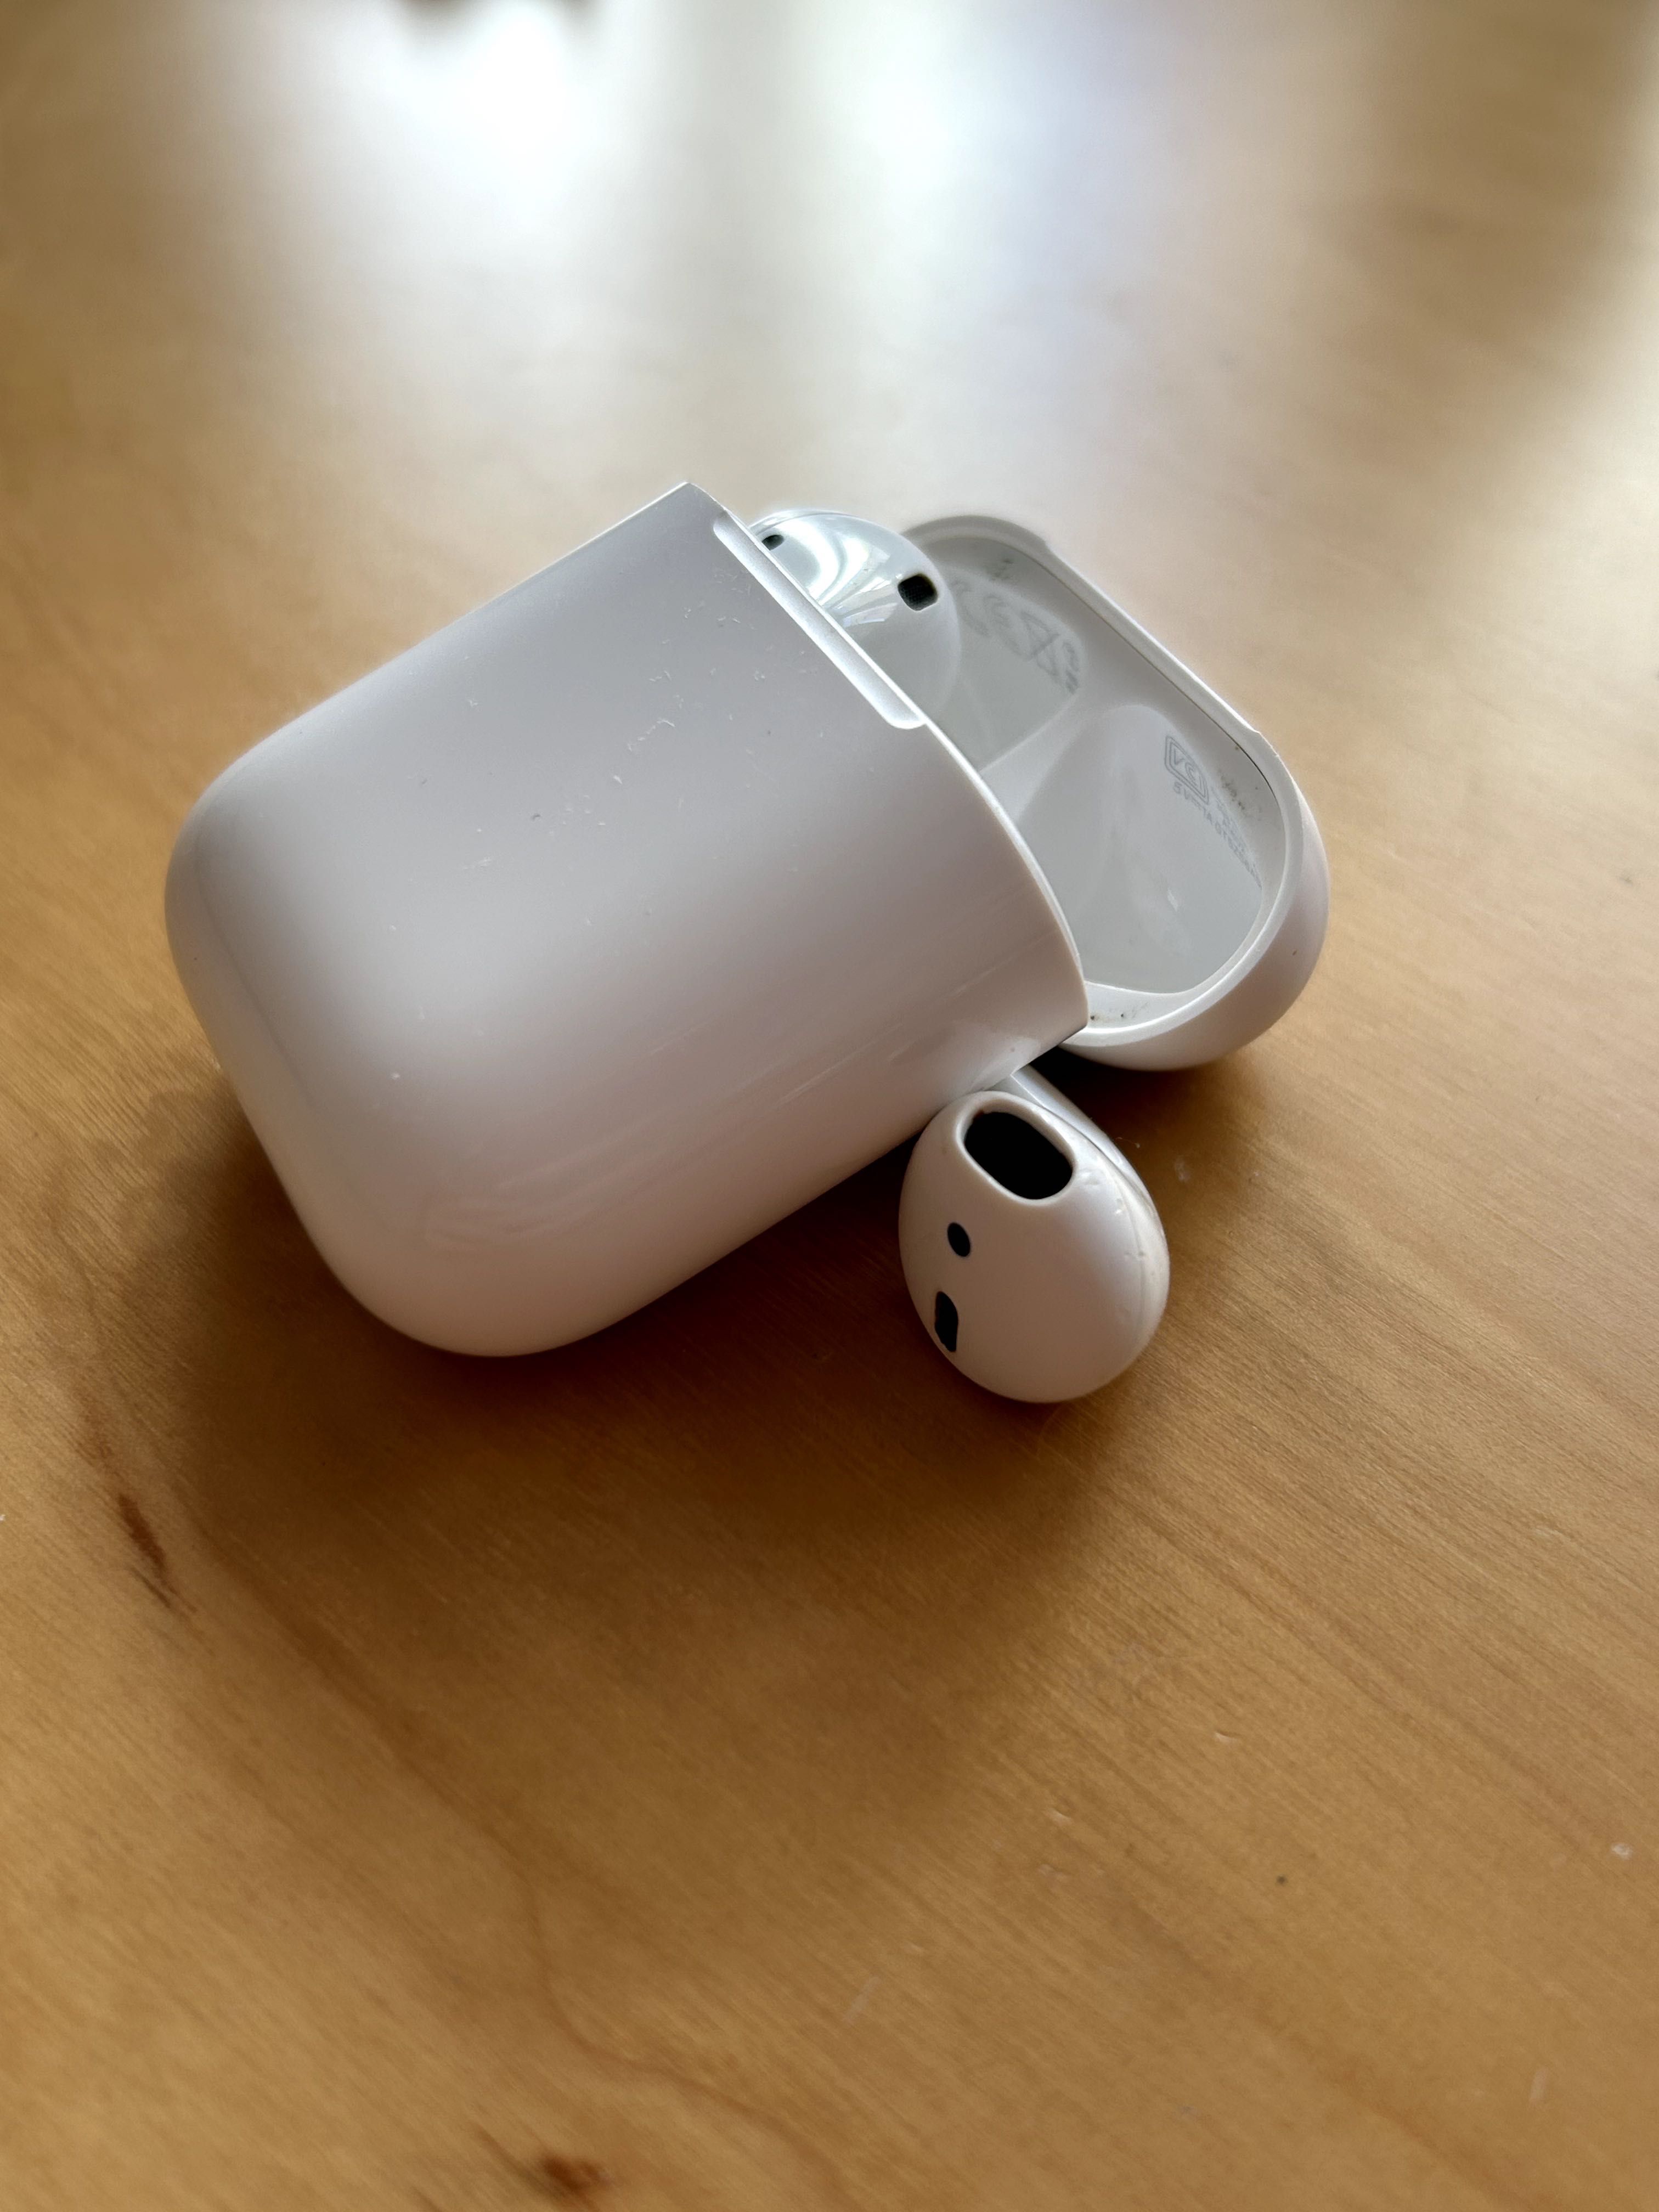 AirPods Apple 2nd Generation - Caixa + 2 AirPods + Capa Protetora